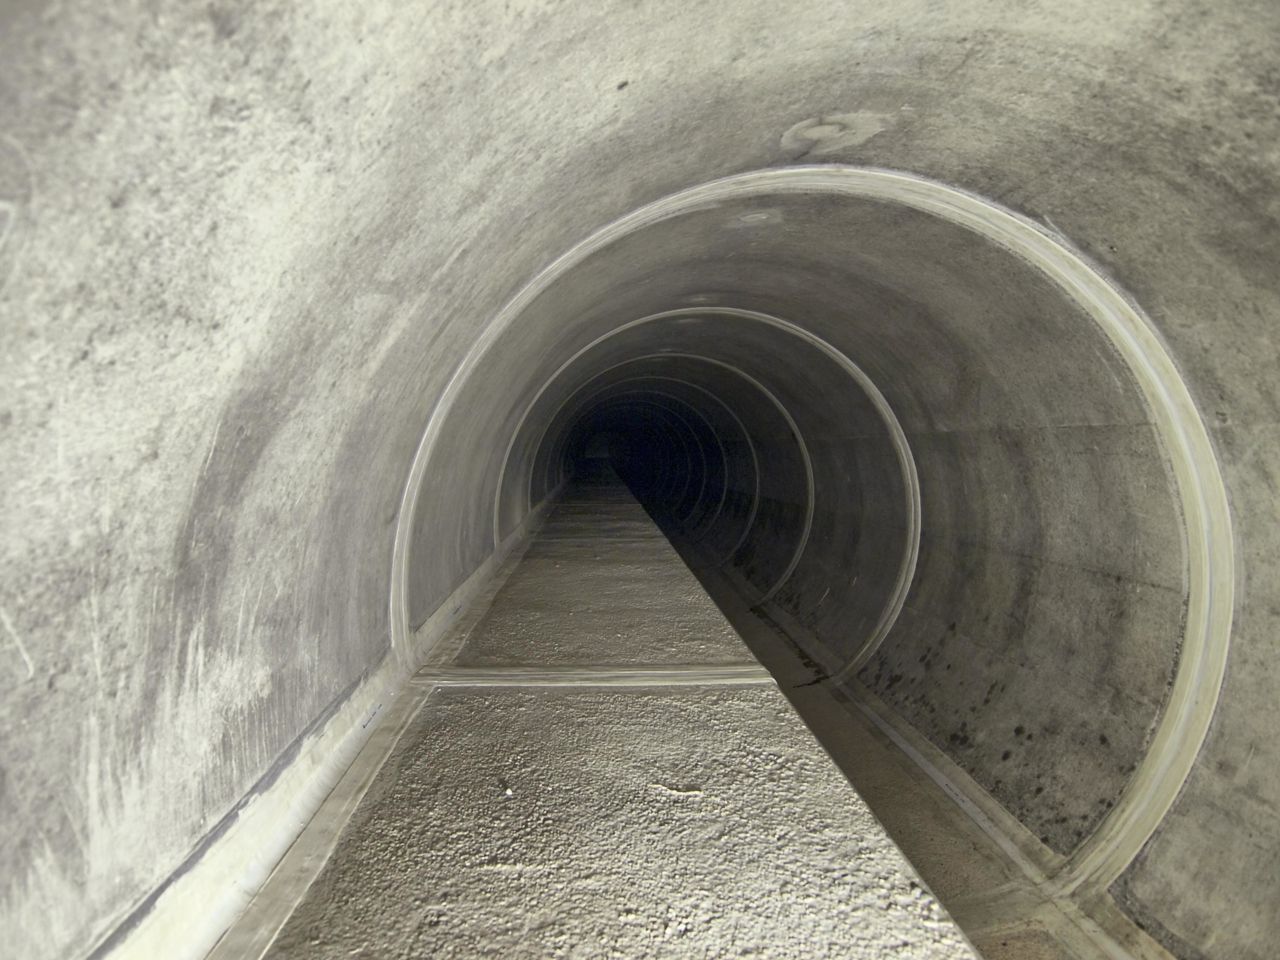 Sikadur Combiflex waterproofing tape at joints in ground water tunnel underground